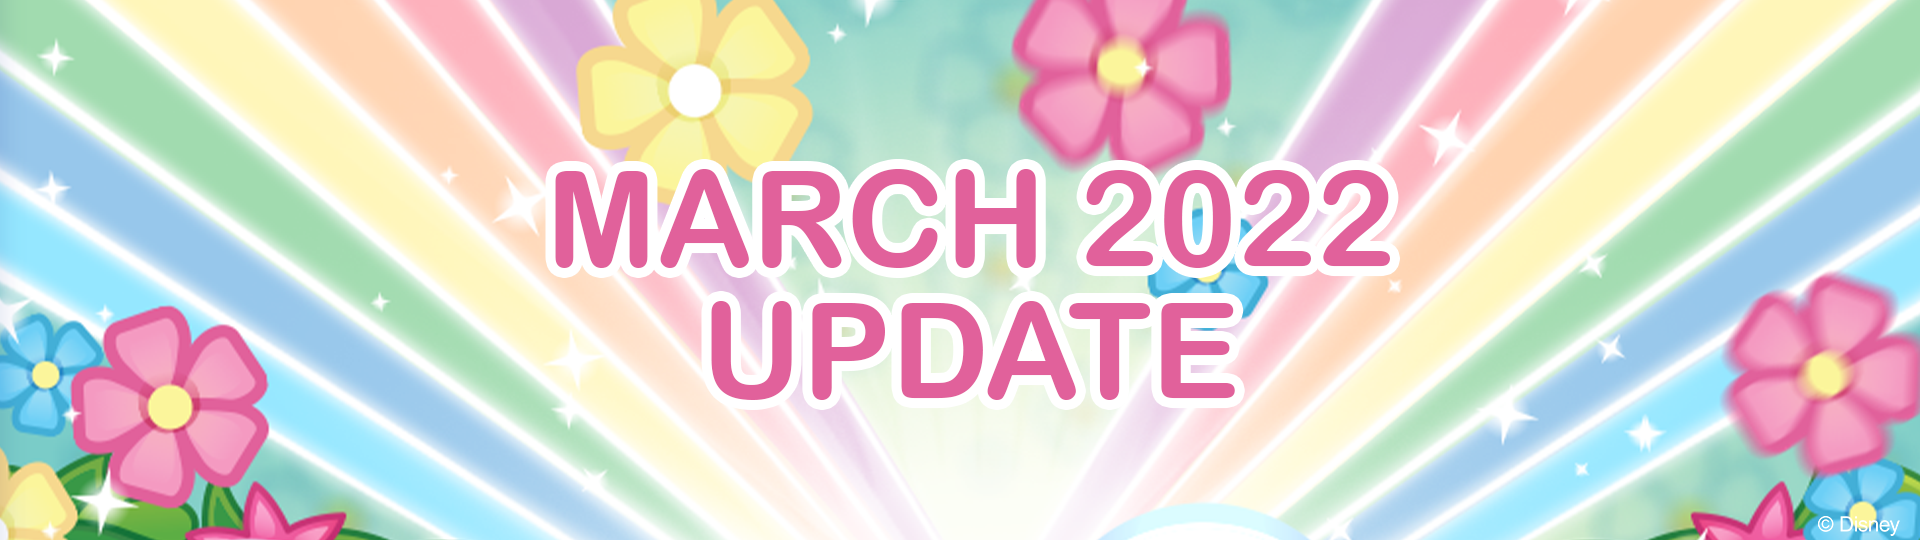 Disney Emoji Blitz Event Calendar 2022 March 2022 Update - Disney Emoji Blitz! Star Wars™, Turning Red